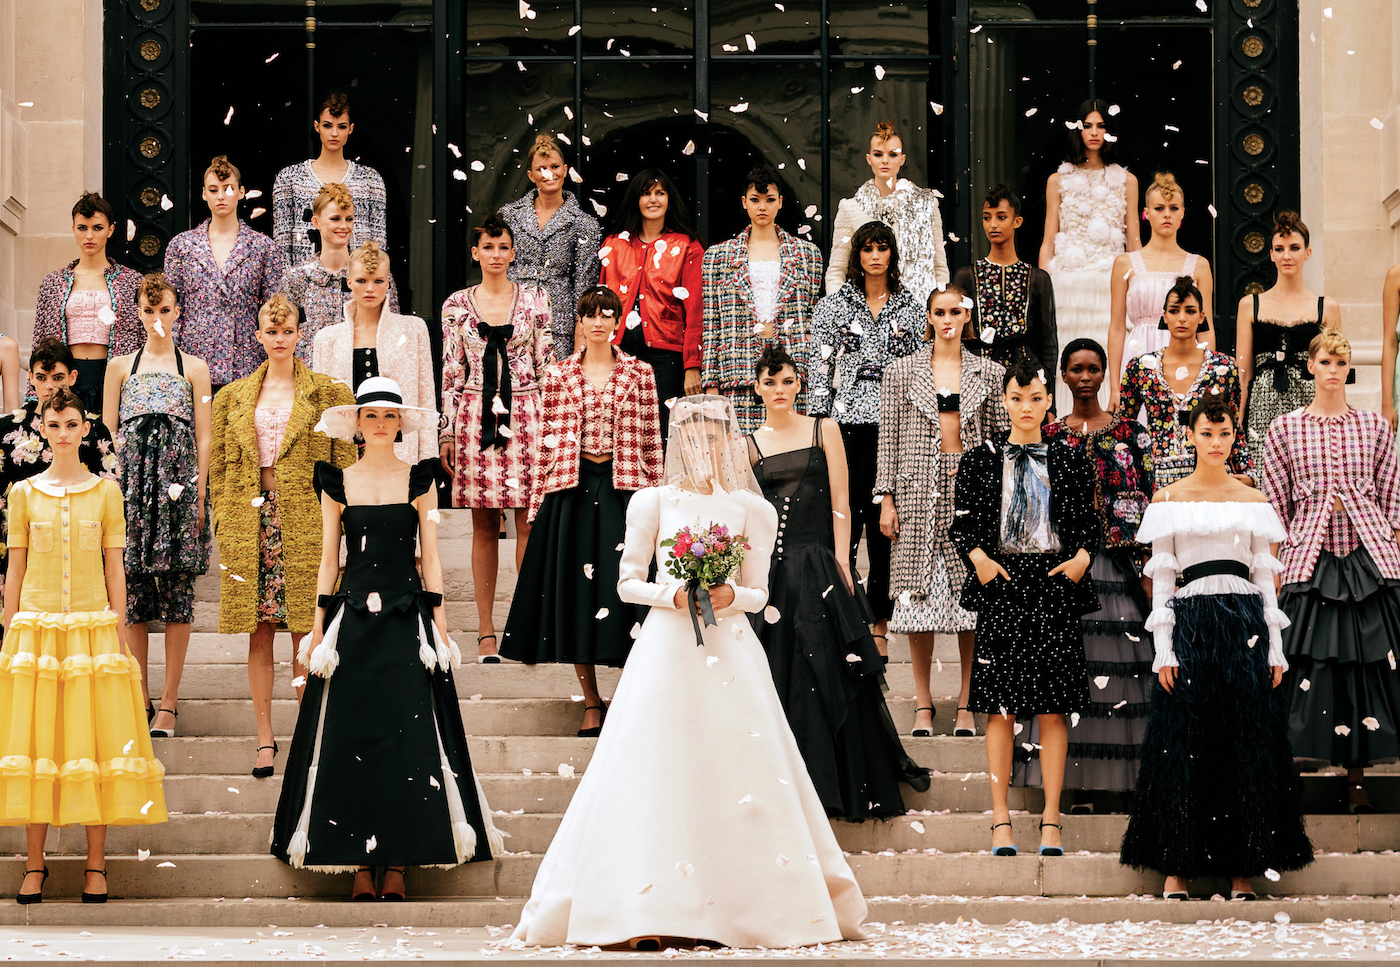 Chanel paints its Autumn/Winter 2021/2022 Haute Couture collection